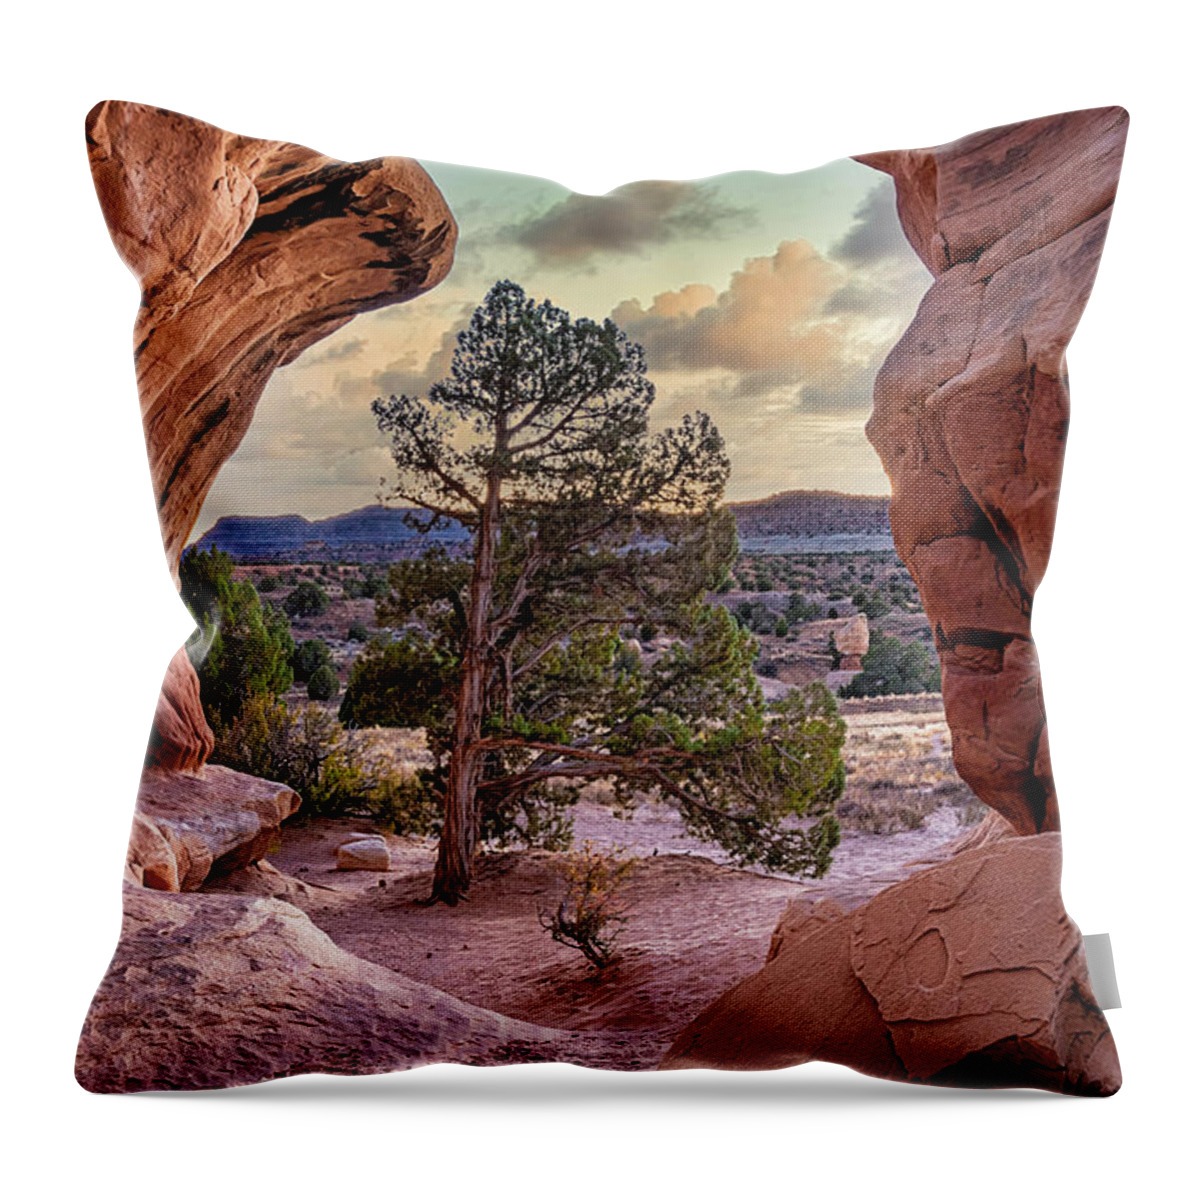 2020 Utah Trip Throw Pillow featuring the photograph Devil's Garden Arch by Gary Johnson